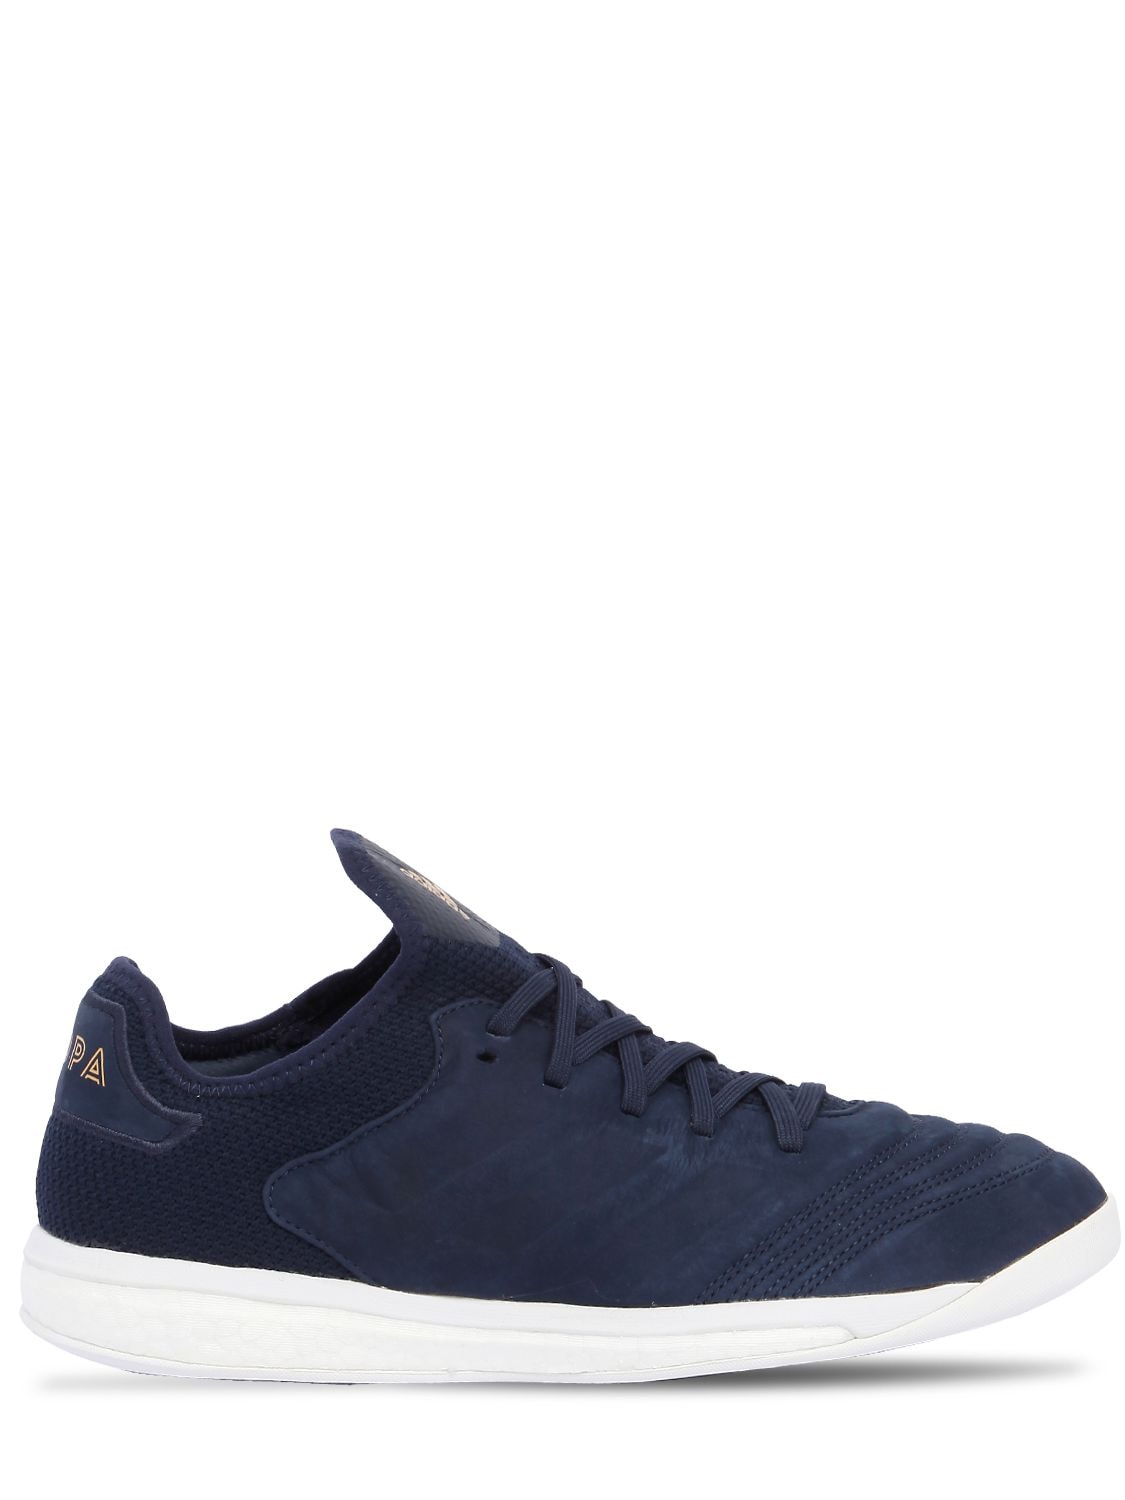 Adidas X Nemeziz Copa 18+ Tr Premium Sneakers In Navy